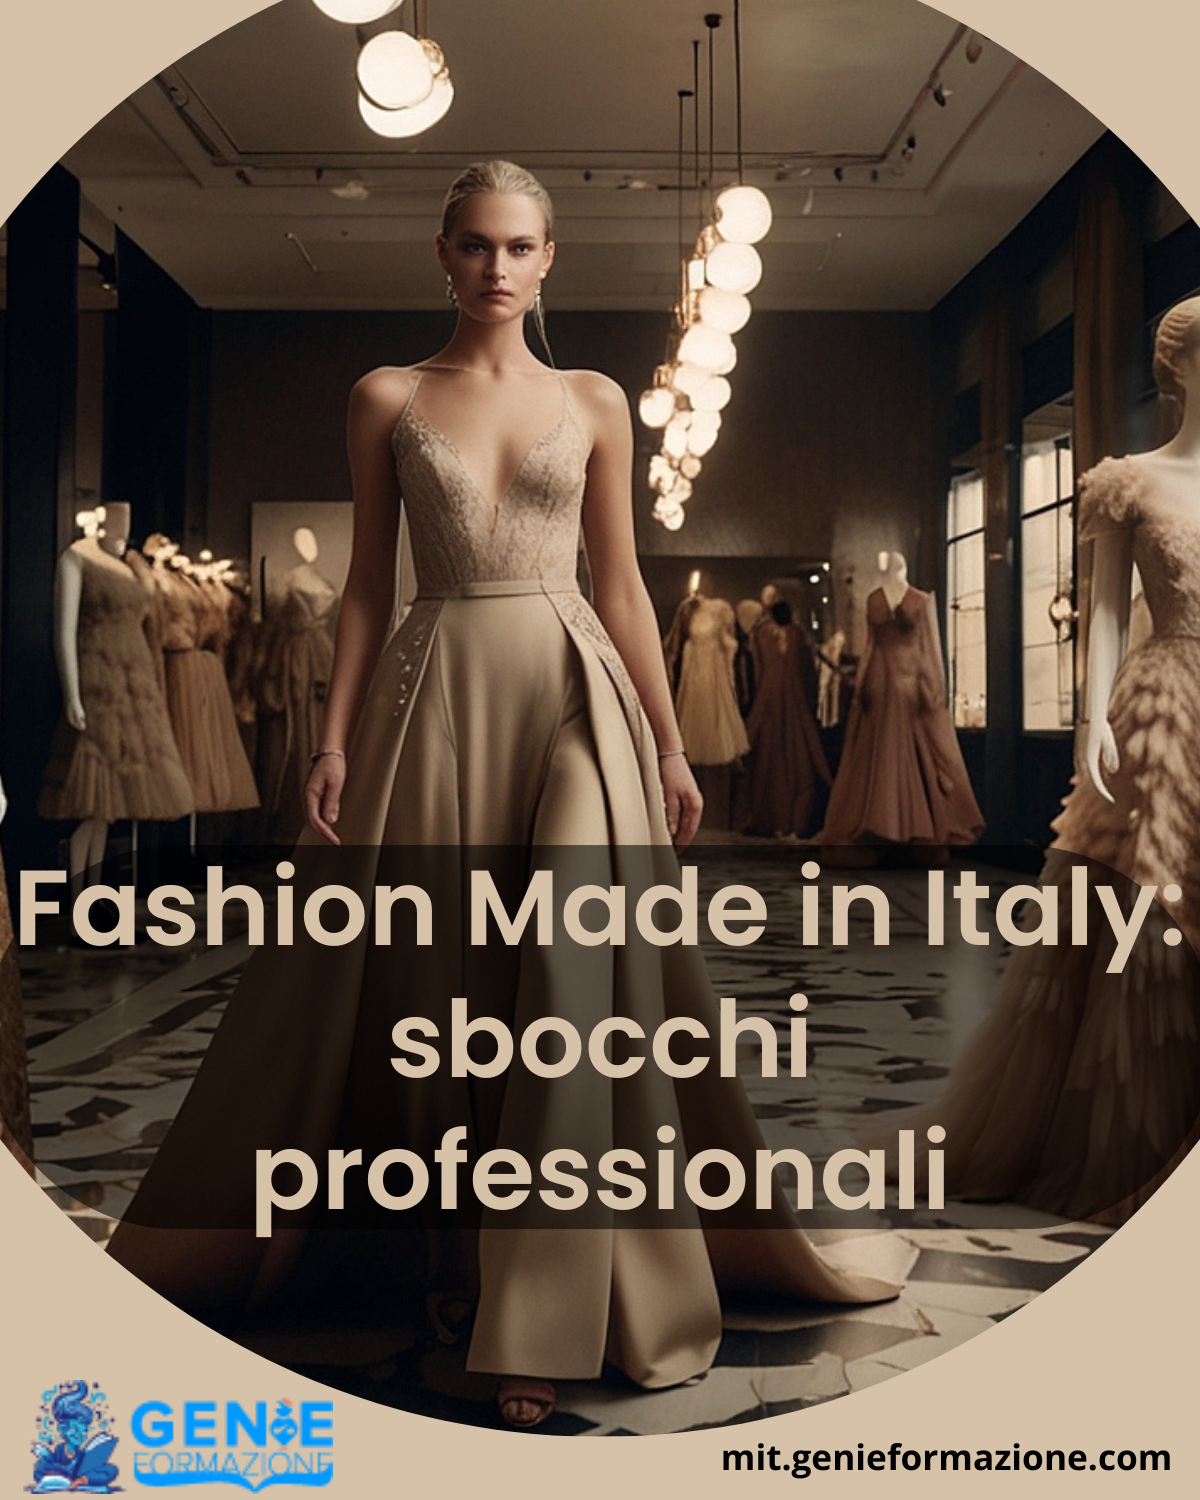 Fashion Made in Italy: Sbocchi professionali